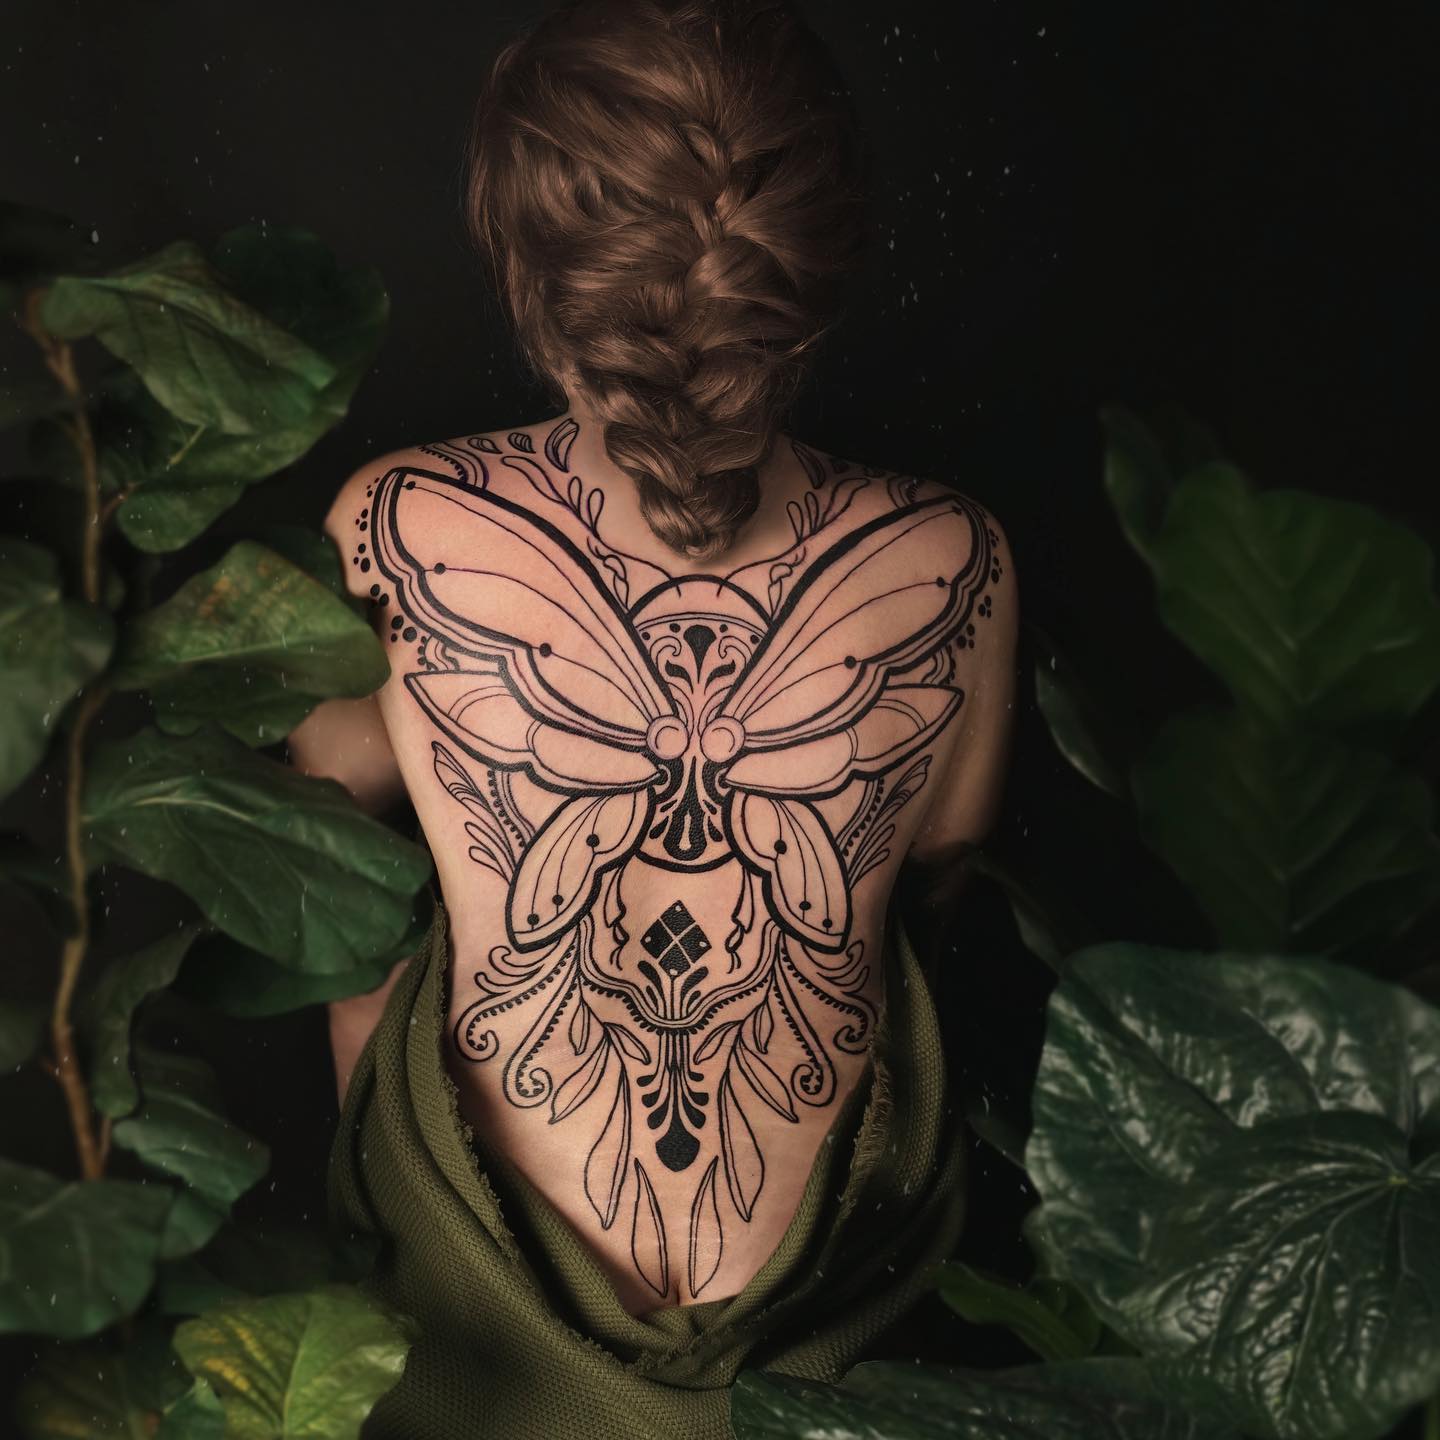 28 Bold Medusa Tattoos To Make You Feel Powerful • Body Artifact